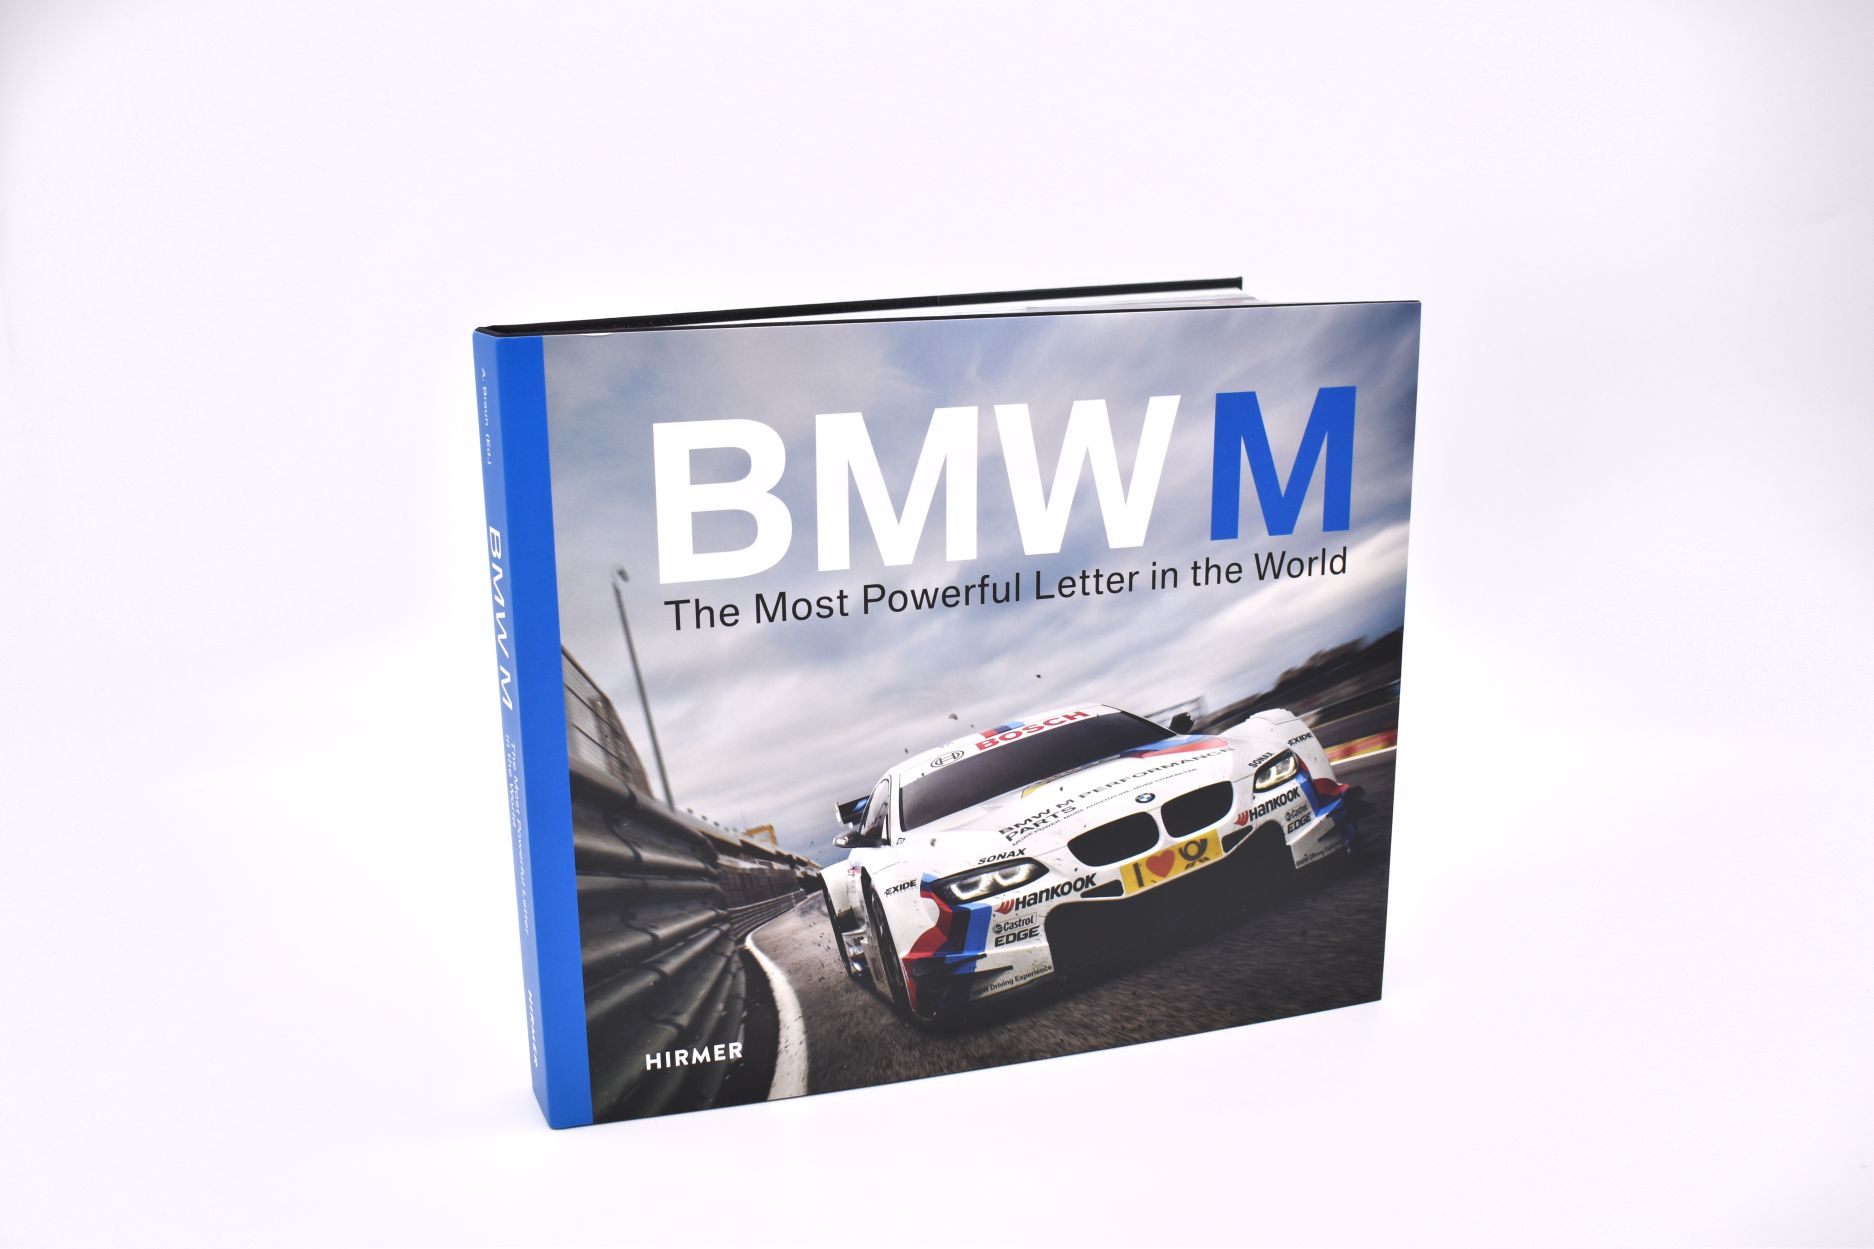 BMWM 01 - click to open lightbox